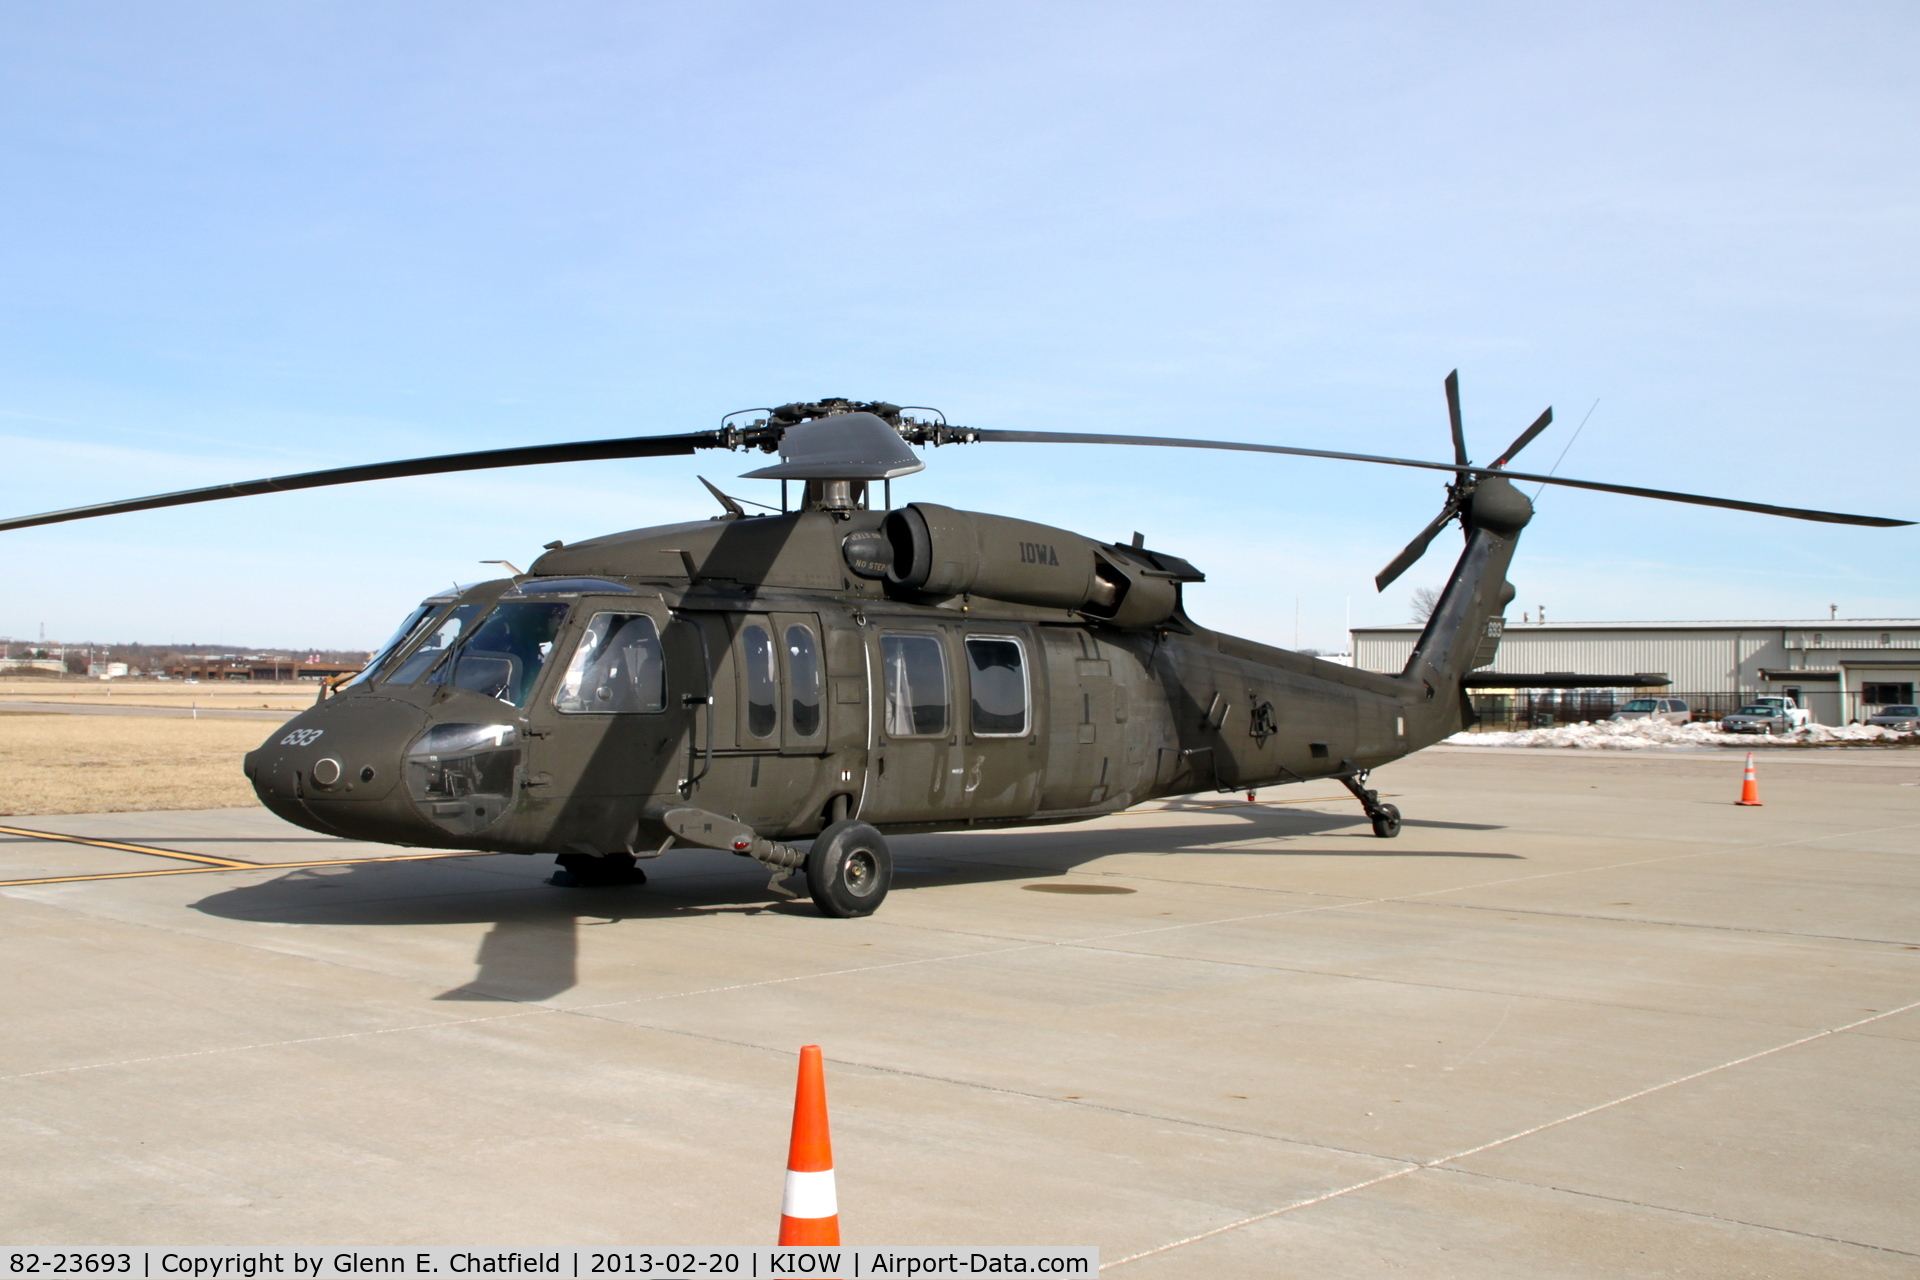 82-23693, 1982 Sikorsky UH-60A Black Hawk C/N 70516, Parked on the ramp